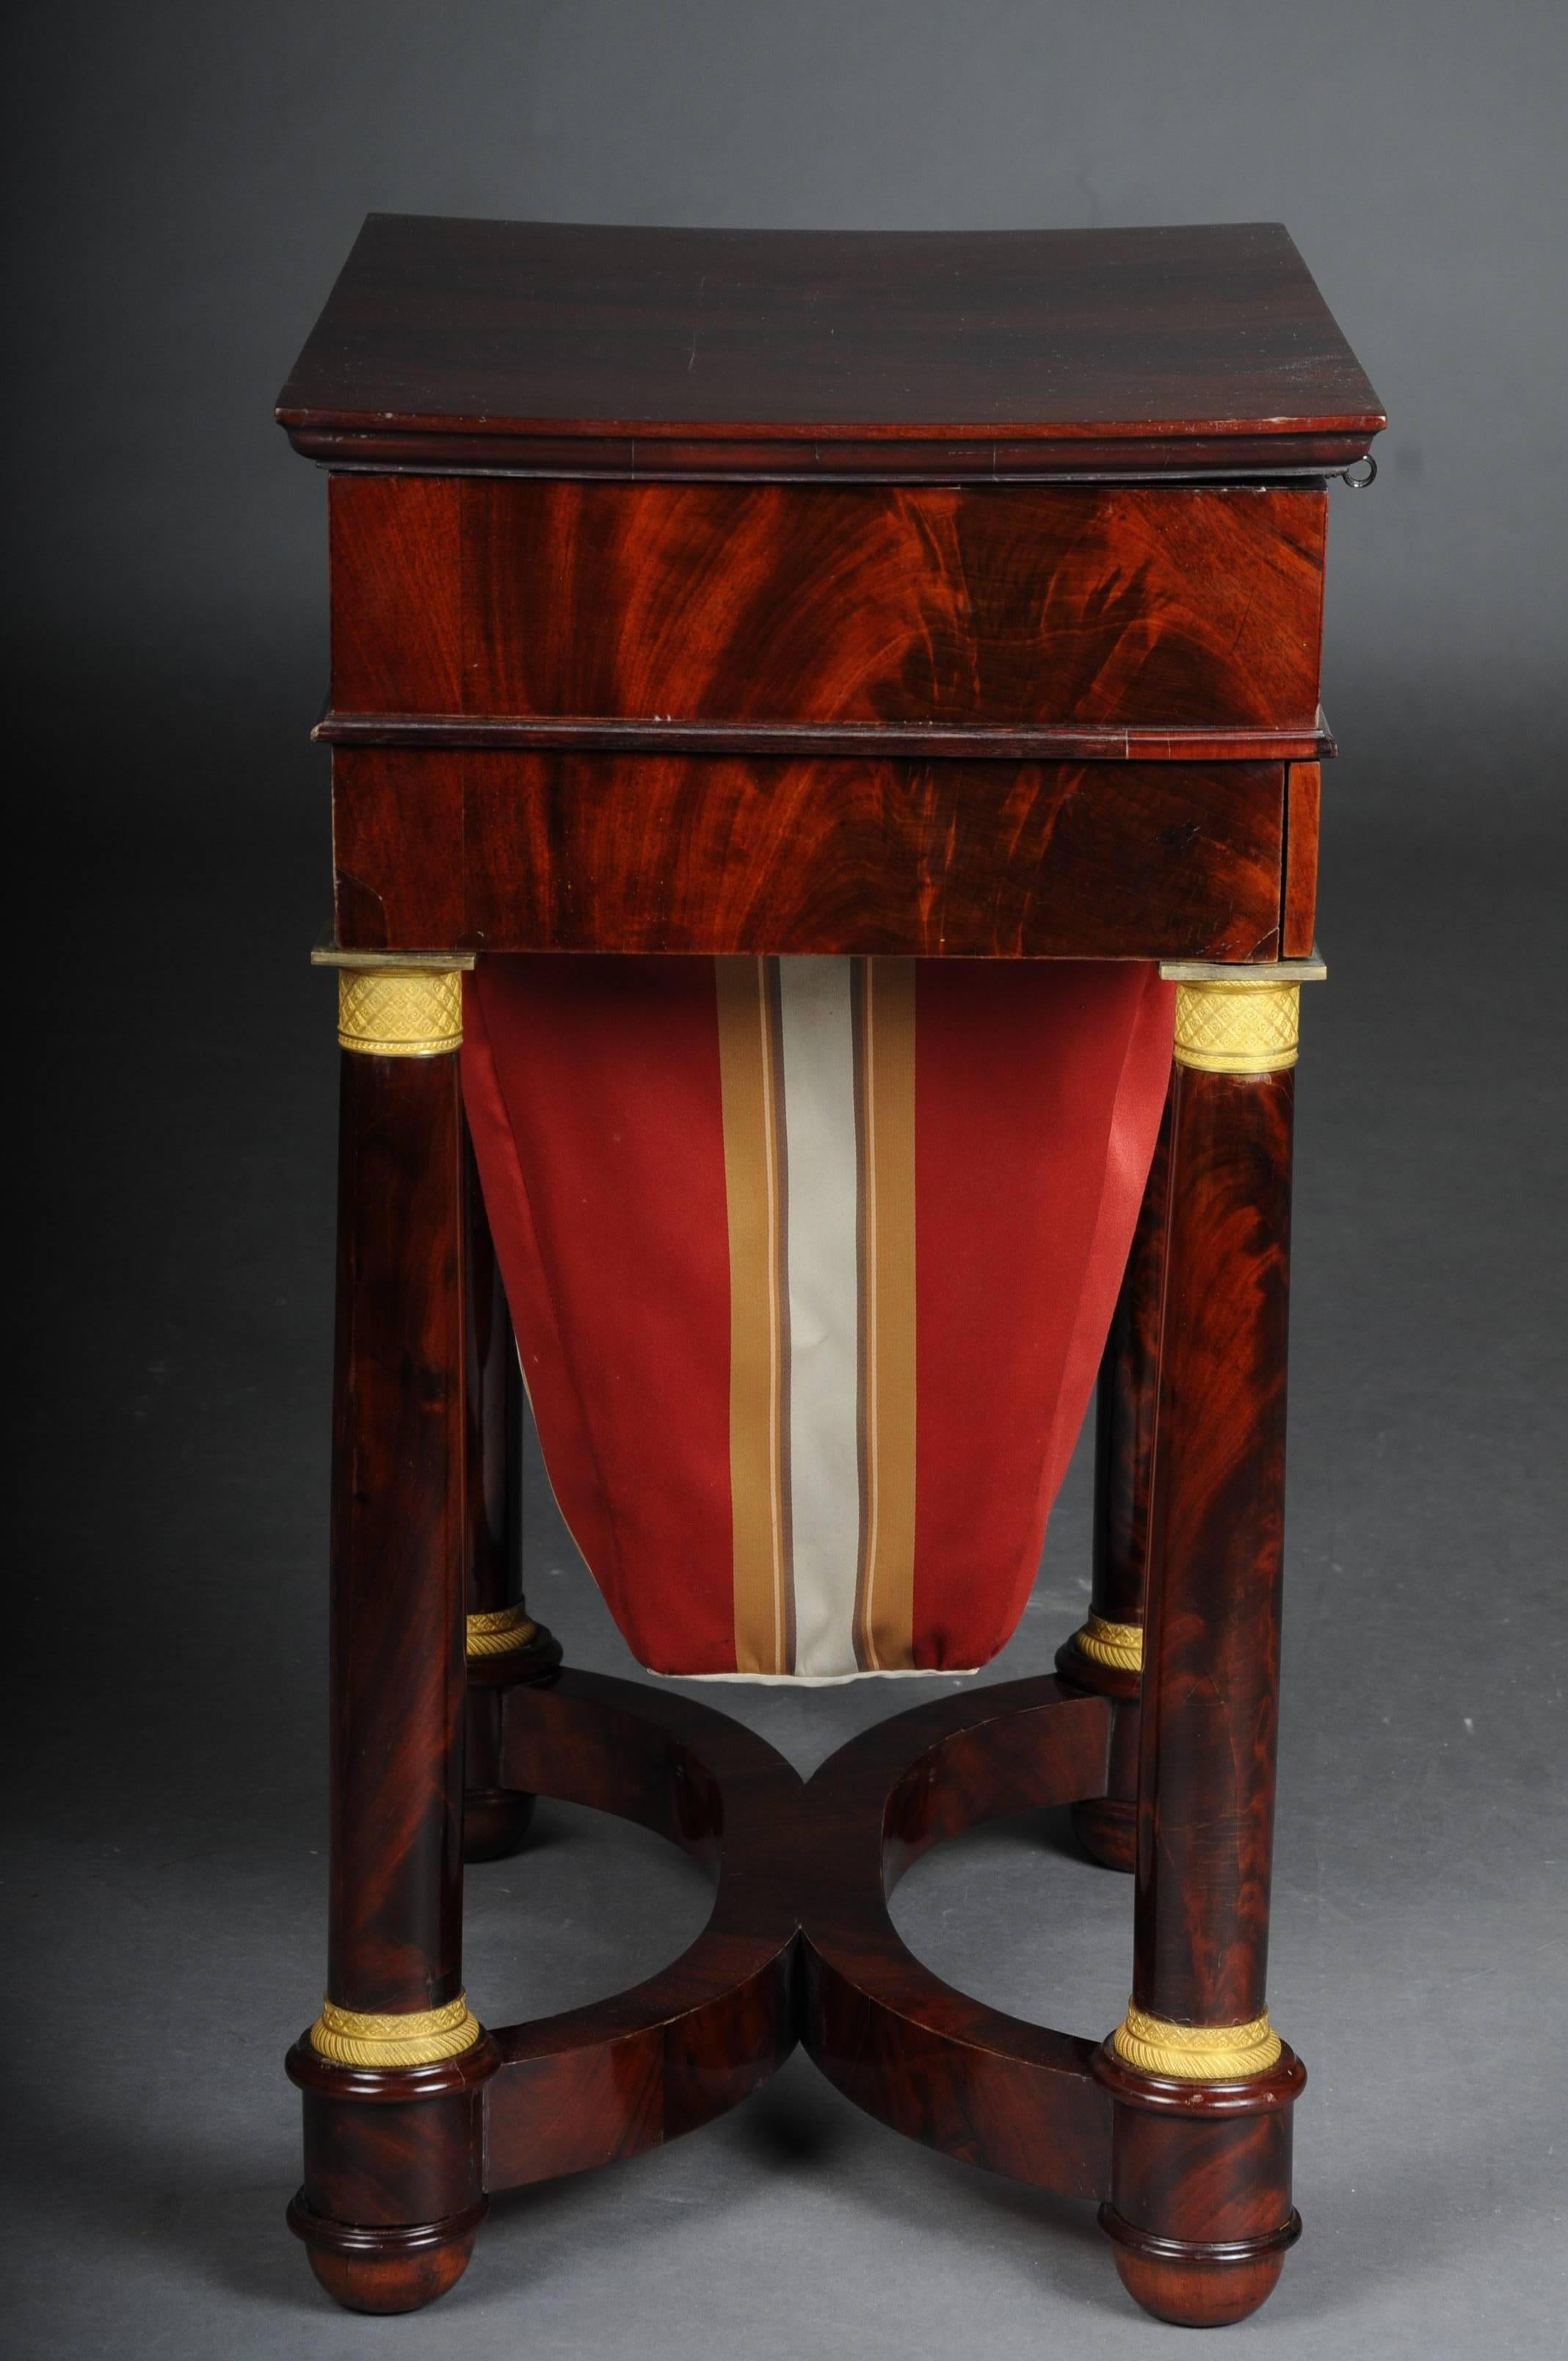 Fired Antique Empire Sewing Table, Paris, circa 1810